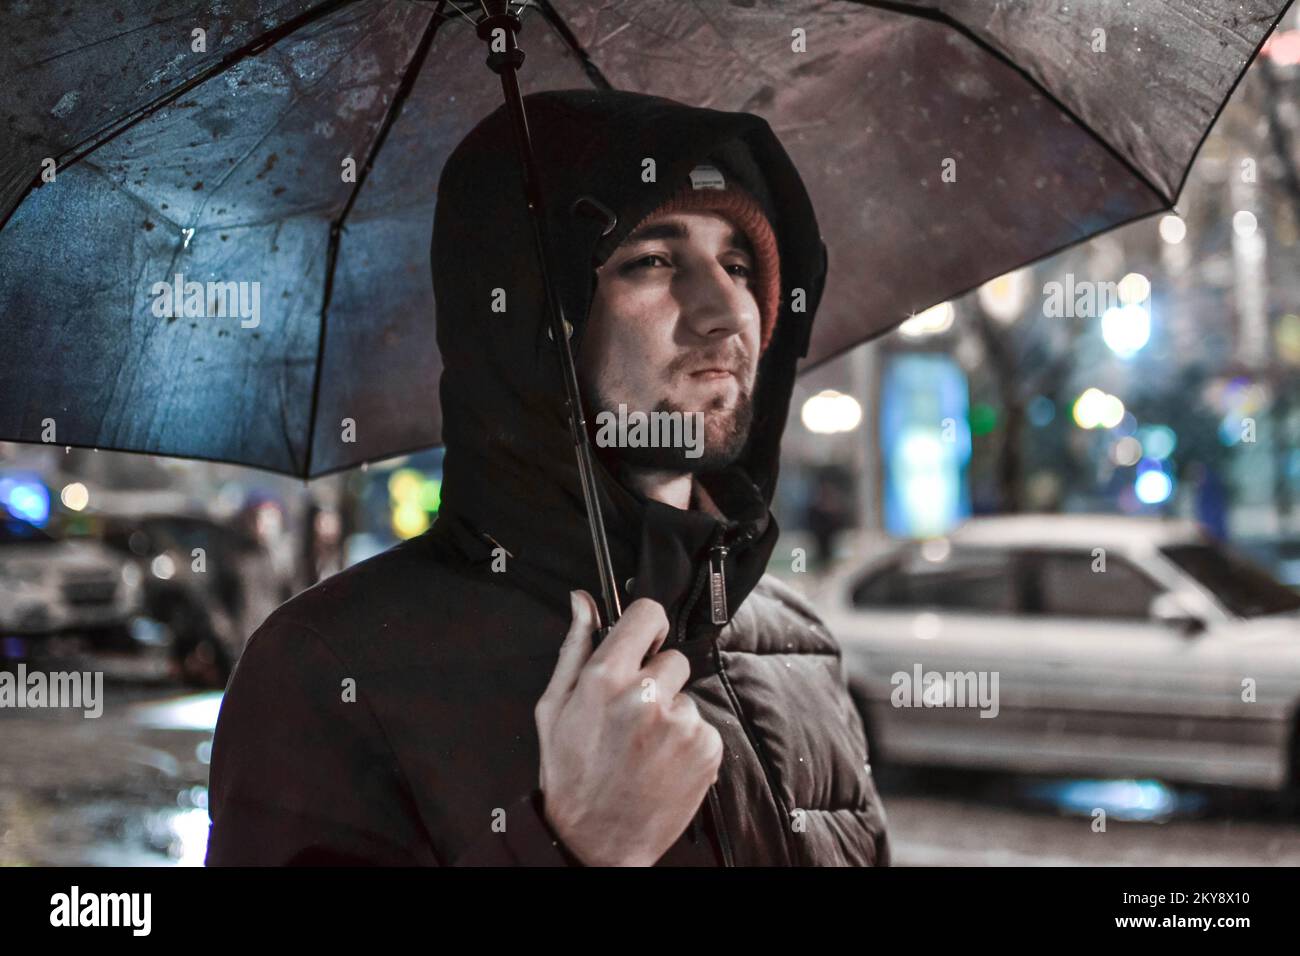 Young thoughtful upset man under umbrella at night. Bad weather Stock Photo